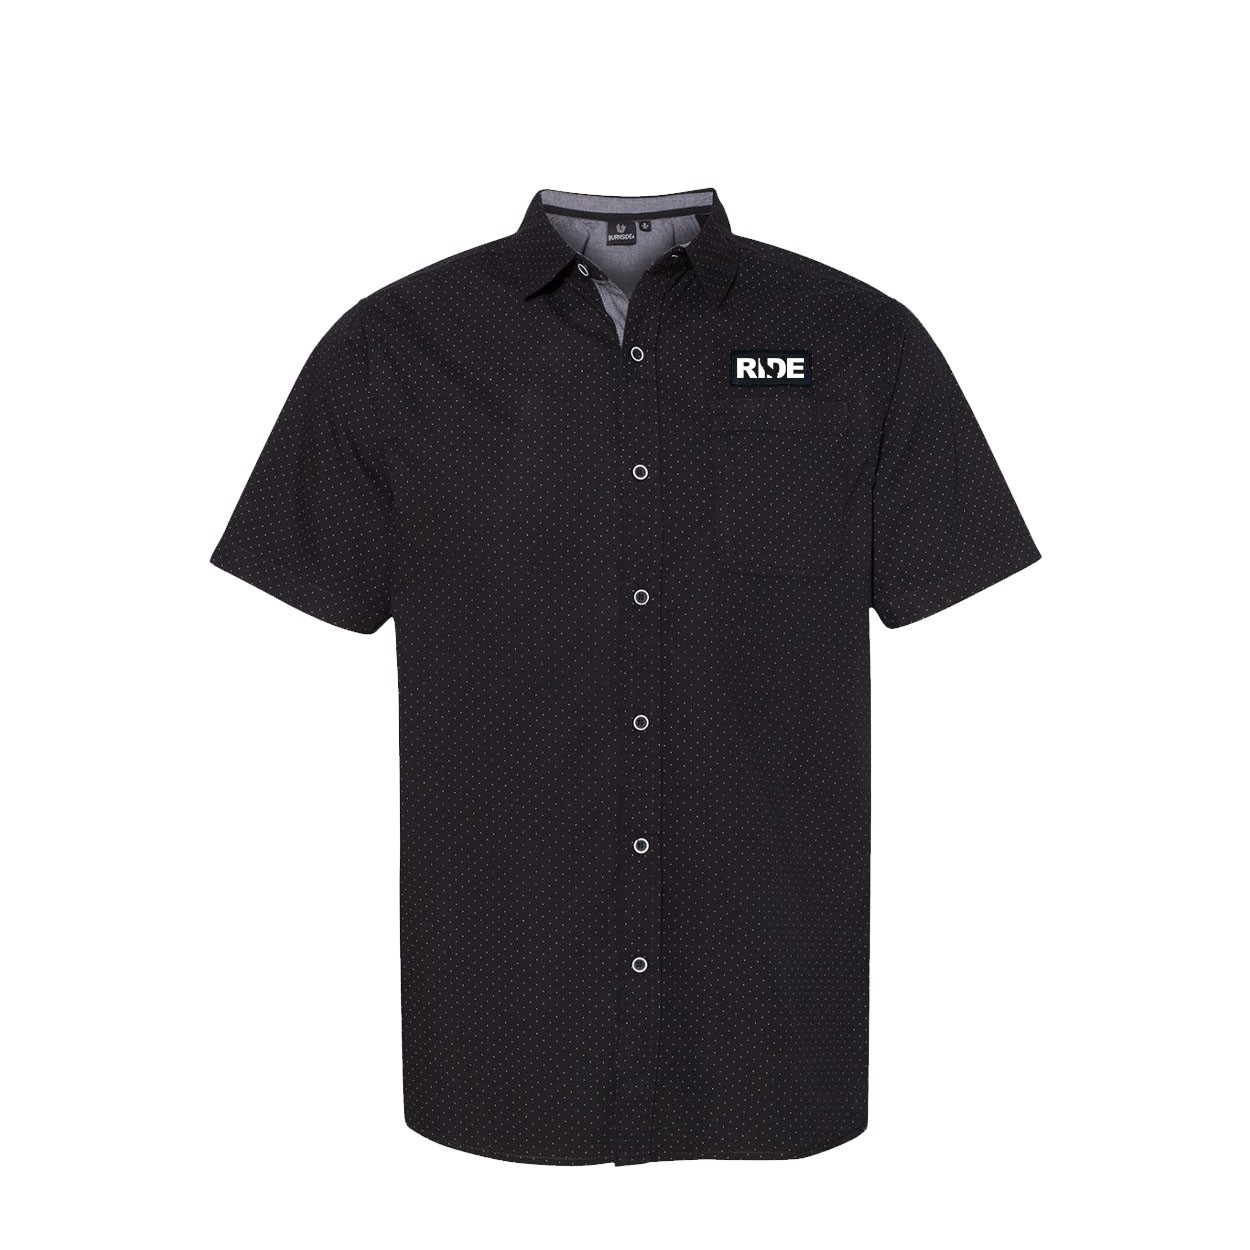 Ride California Classic Poplin Short Sleeve Woven Shirt Black/White Dot (White Logo)